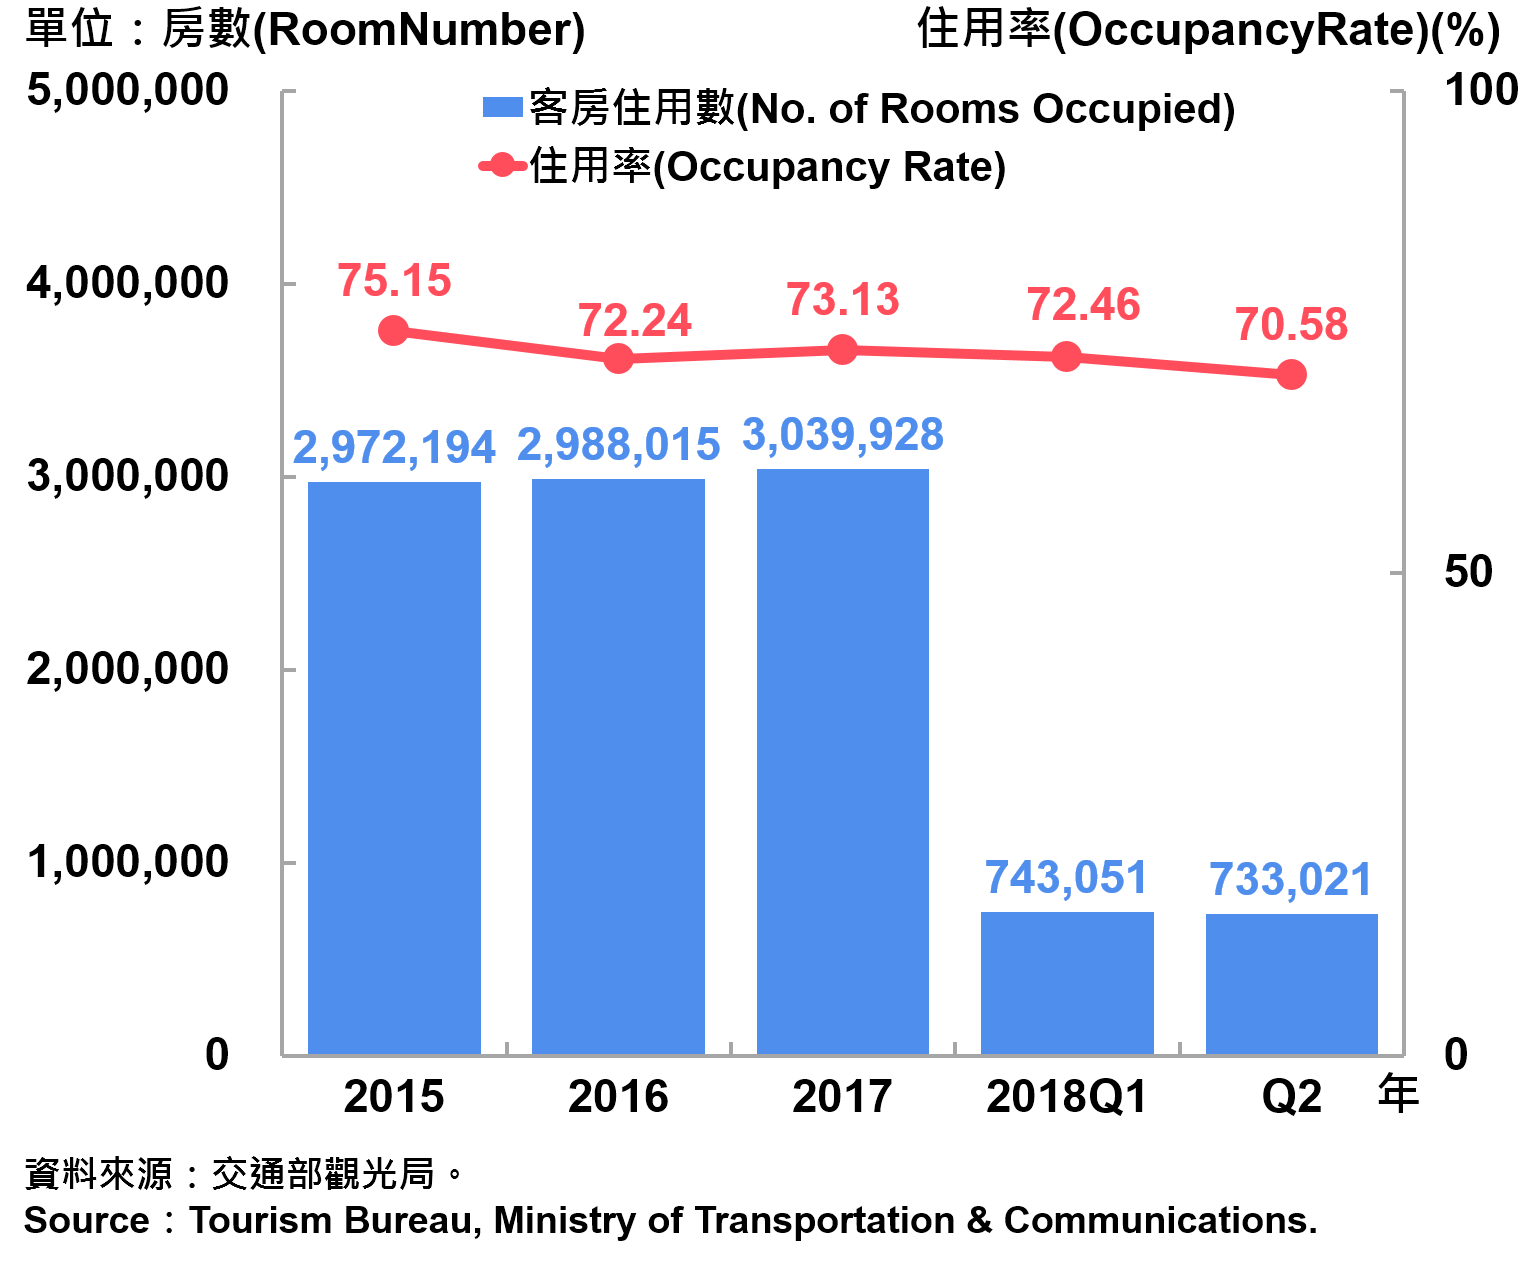 臺北市觀光旅館客房住用率統計—2018Q2 Occupancy Rate on Tourist Hotel Operations in Taipei City—2018Q2